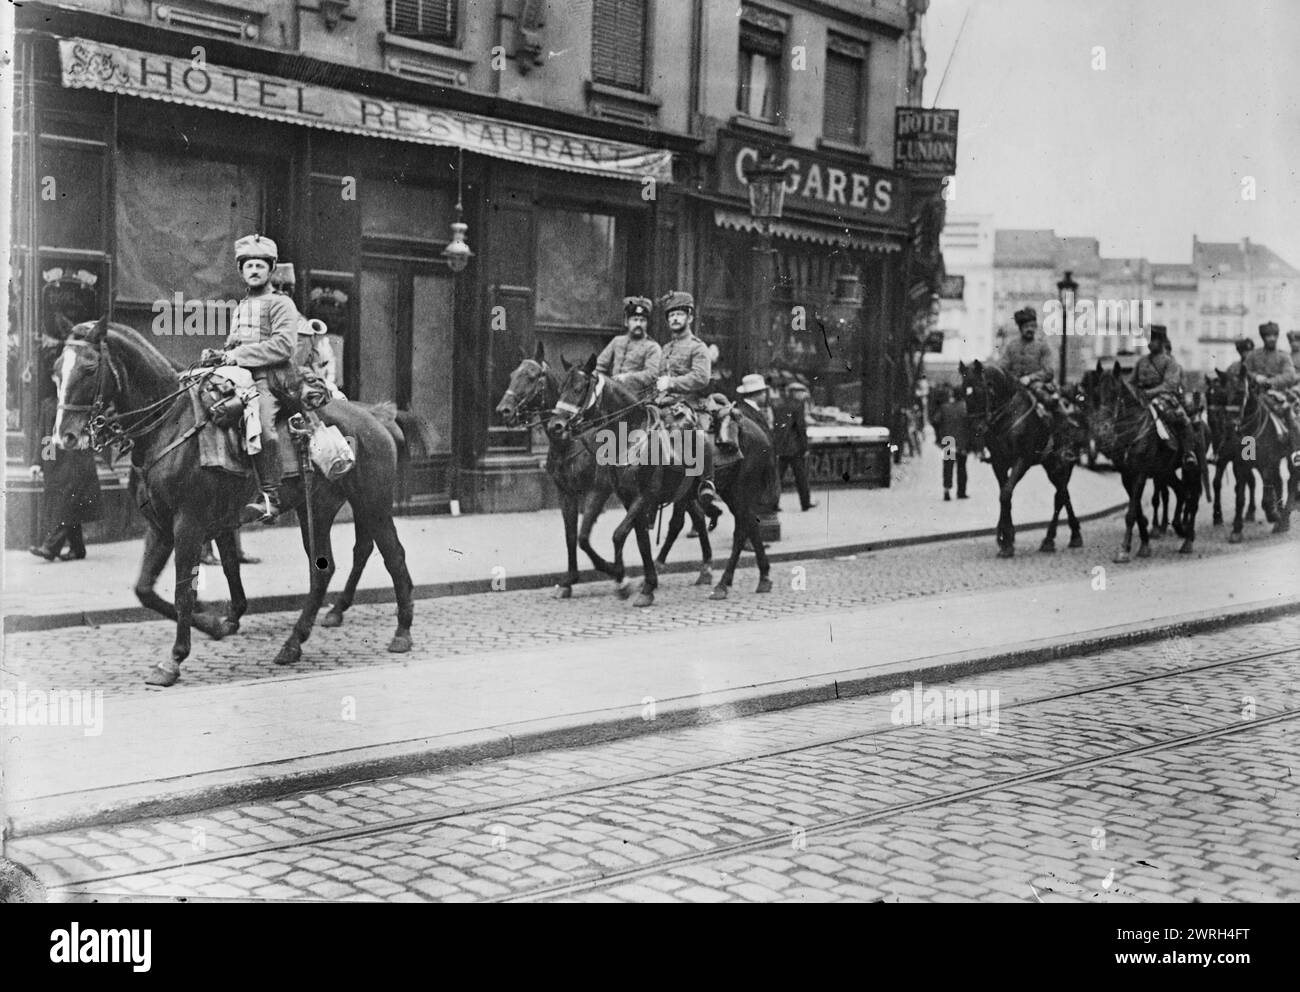 German Hussars in Antwerp, between c1914 and c1915. German Hussars on horses in the street in Antwerp, Belgium during World War I. Stock Photo